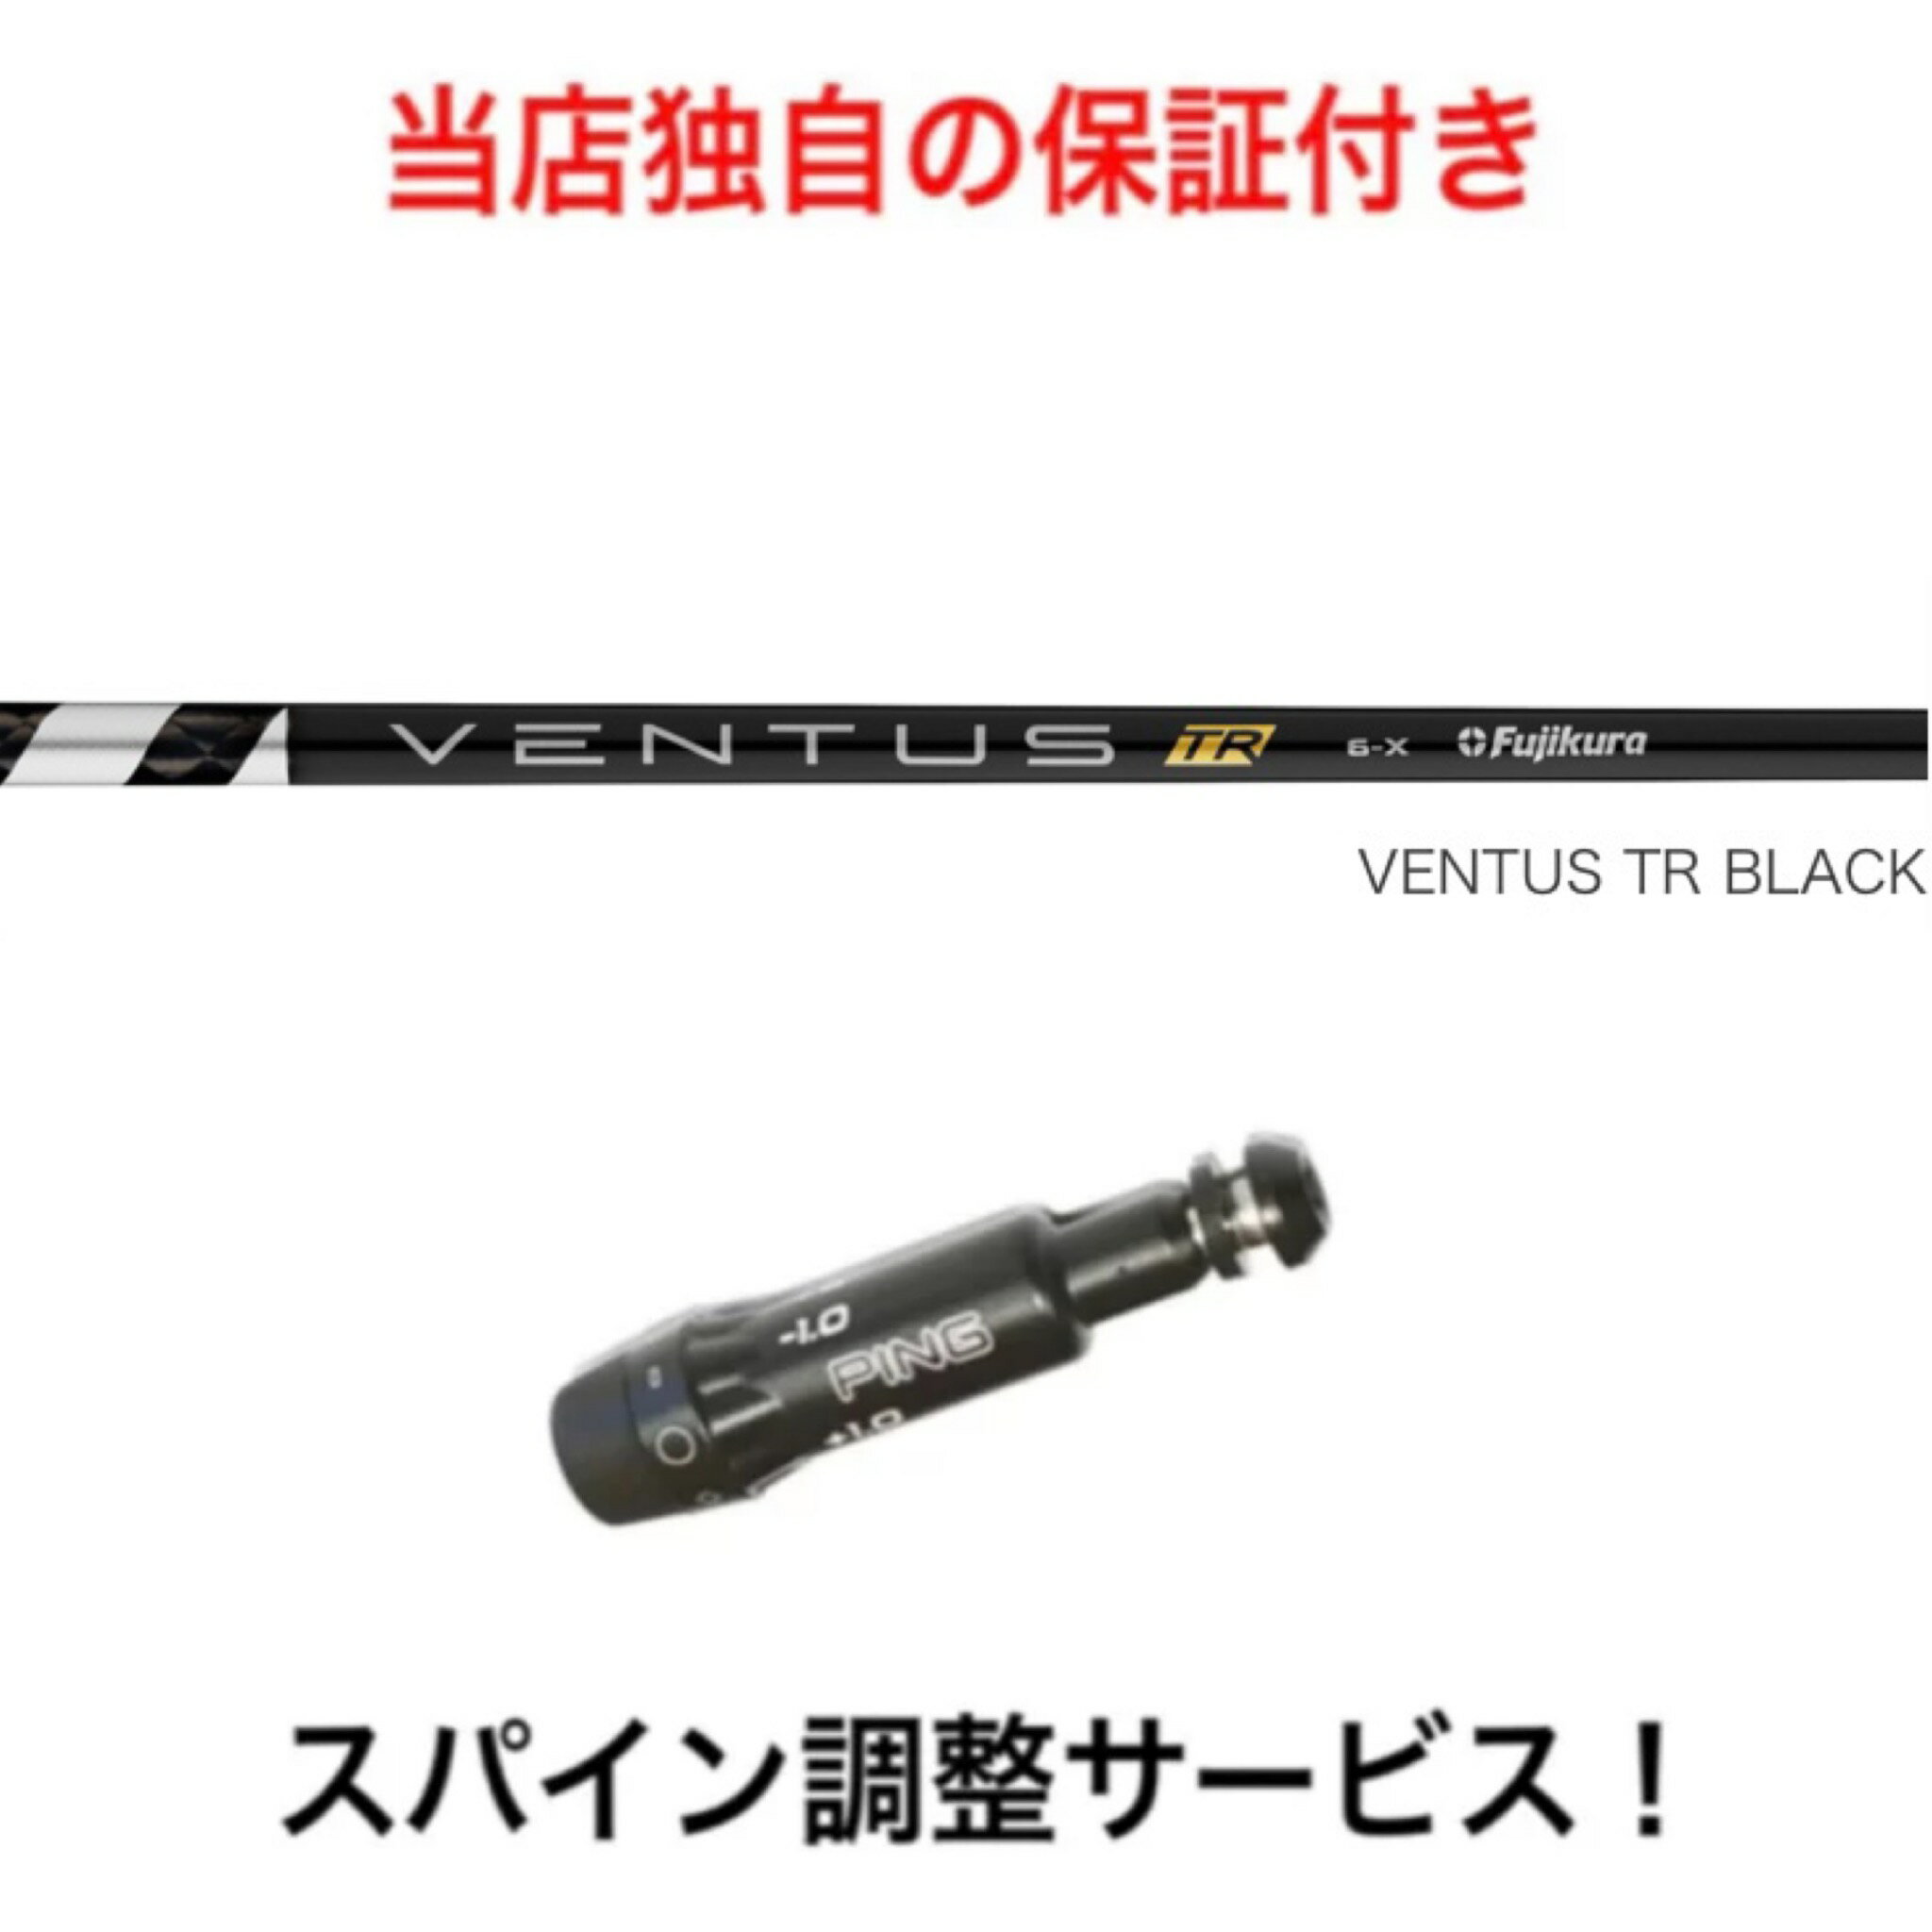 PN 【スパイン調整無料】Fujikura VENTUS TR BLACK ピン 最新 G430/G425/G410 対応スリーブ付 ドライバー ゴルフ シャフト フジクラ ベンタス TRブラック